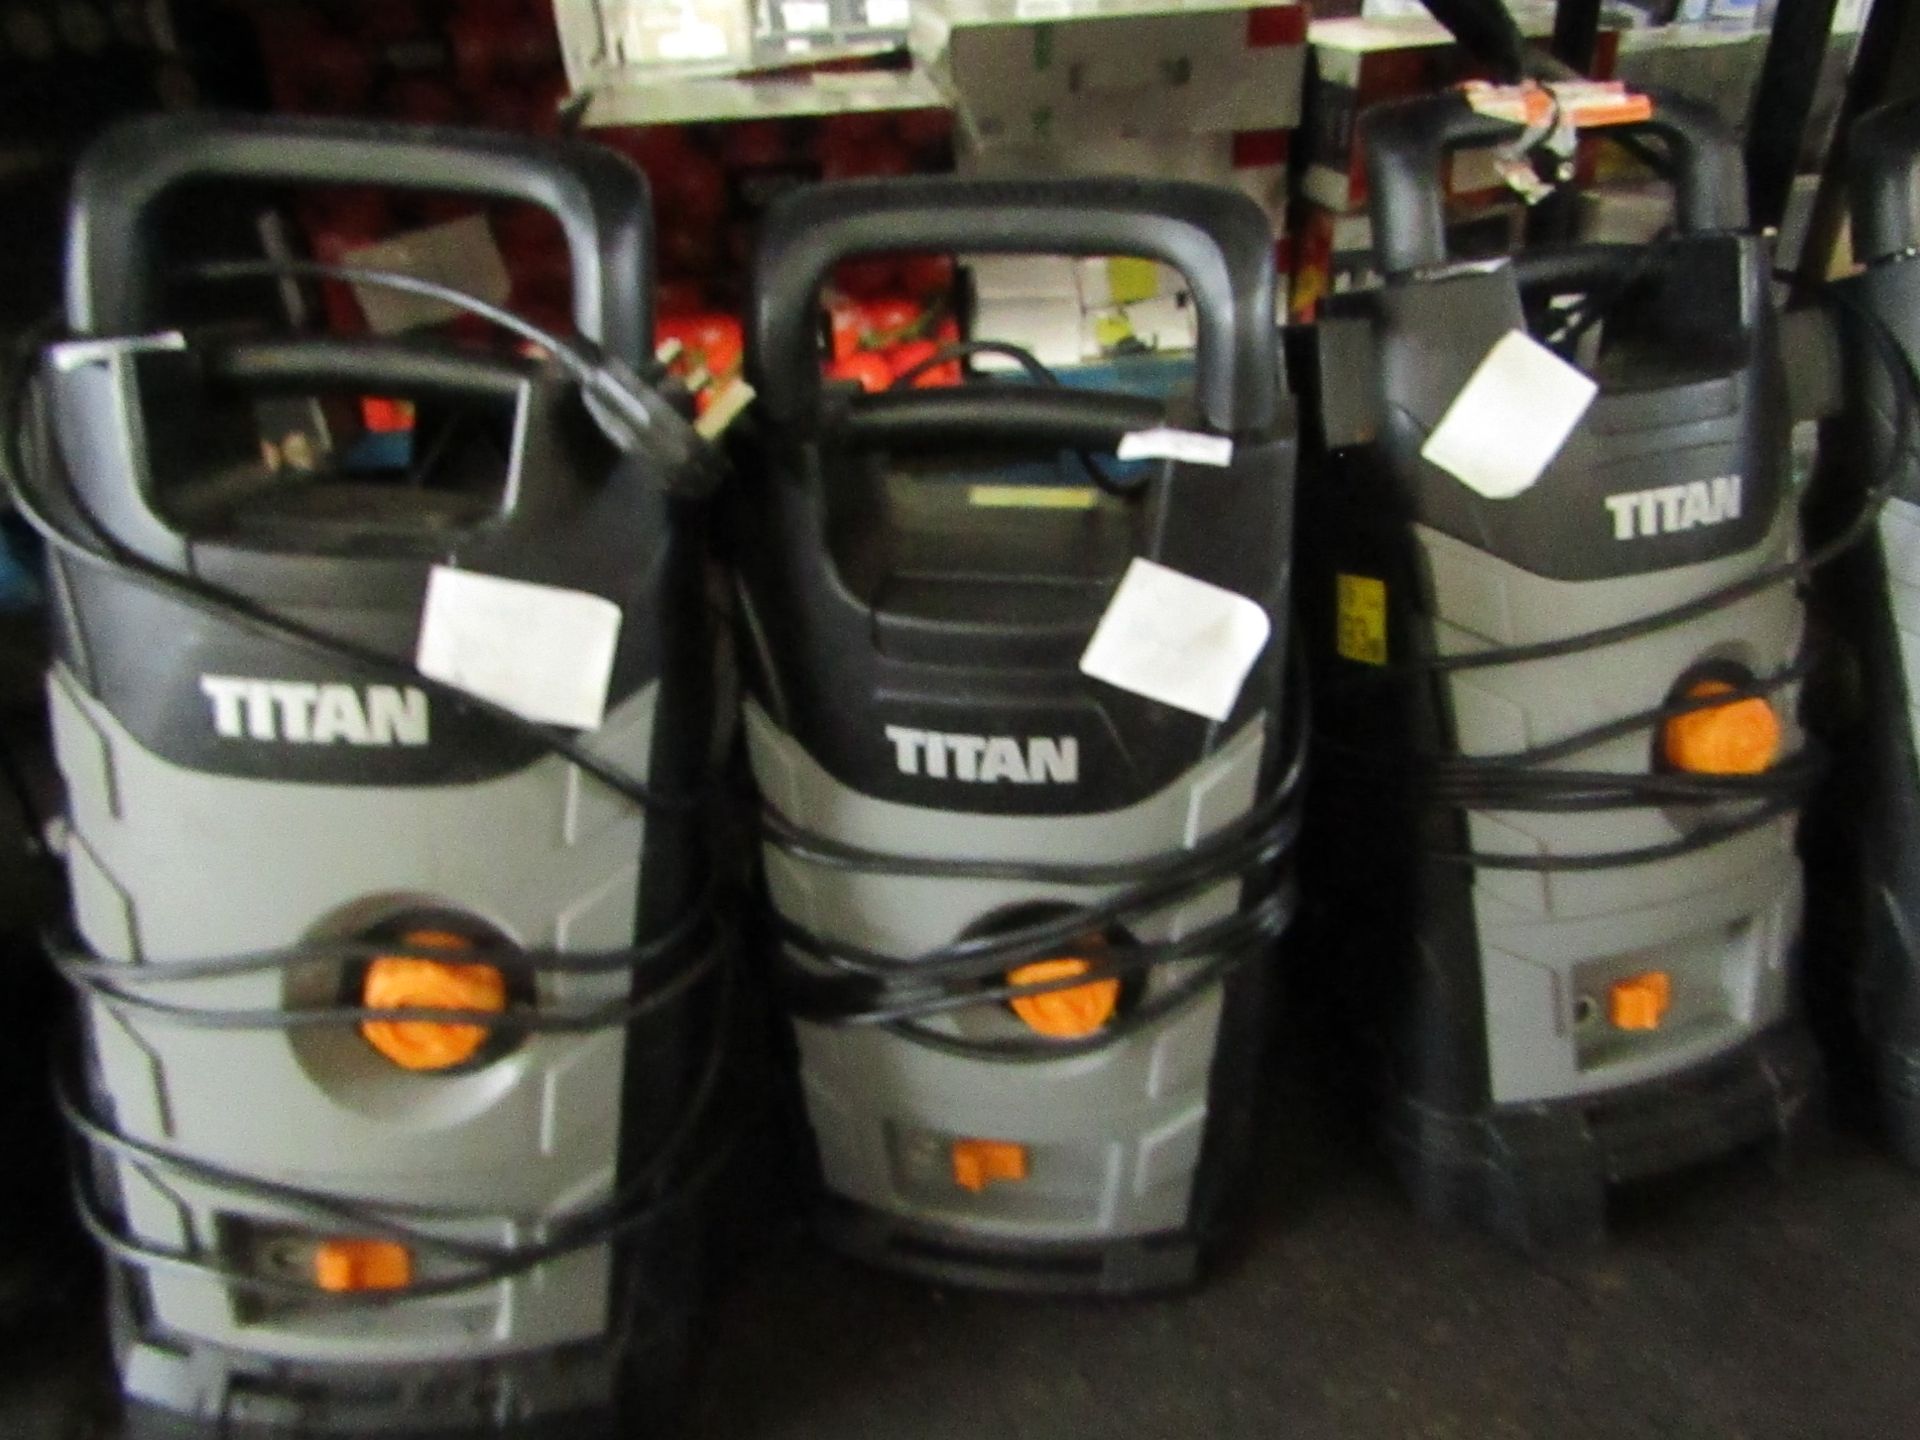 Titan - 1800w High Pressure Washer - TTB1800PRW - Item Power On - Please Note No Attachment Present.